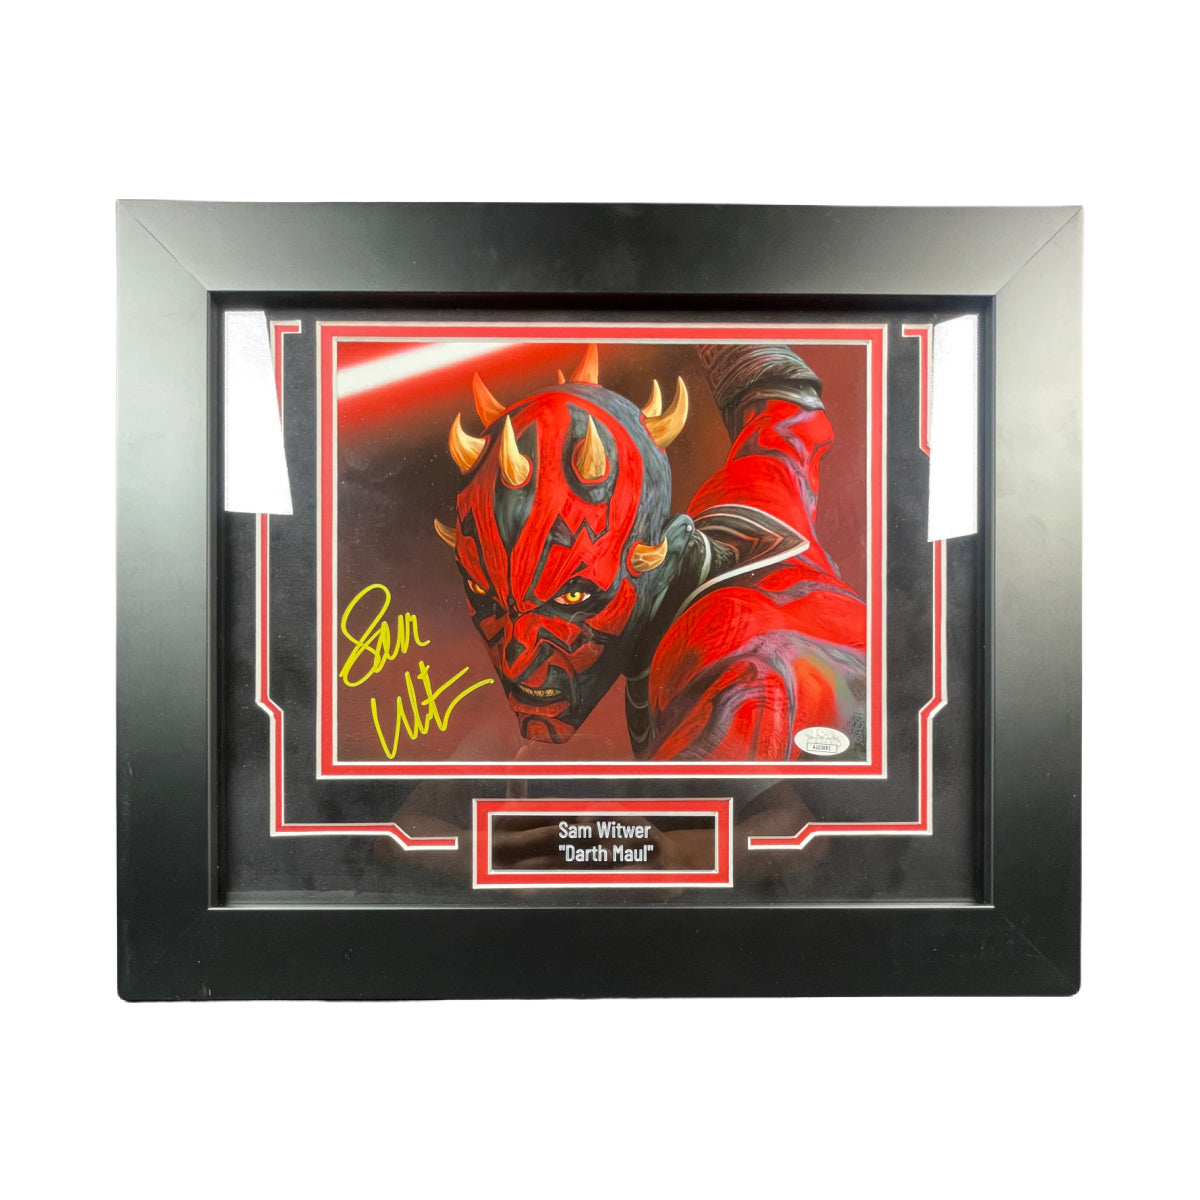 Sam Witwer Signed 8x10 Photo Custom Framed Star Wars Darth Maul Autographed ACOA